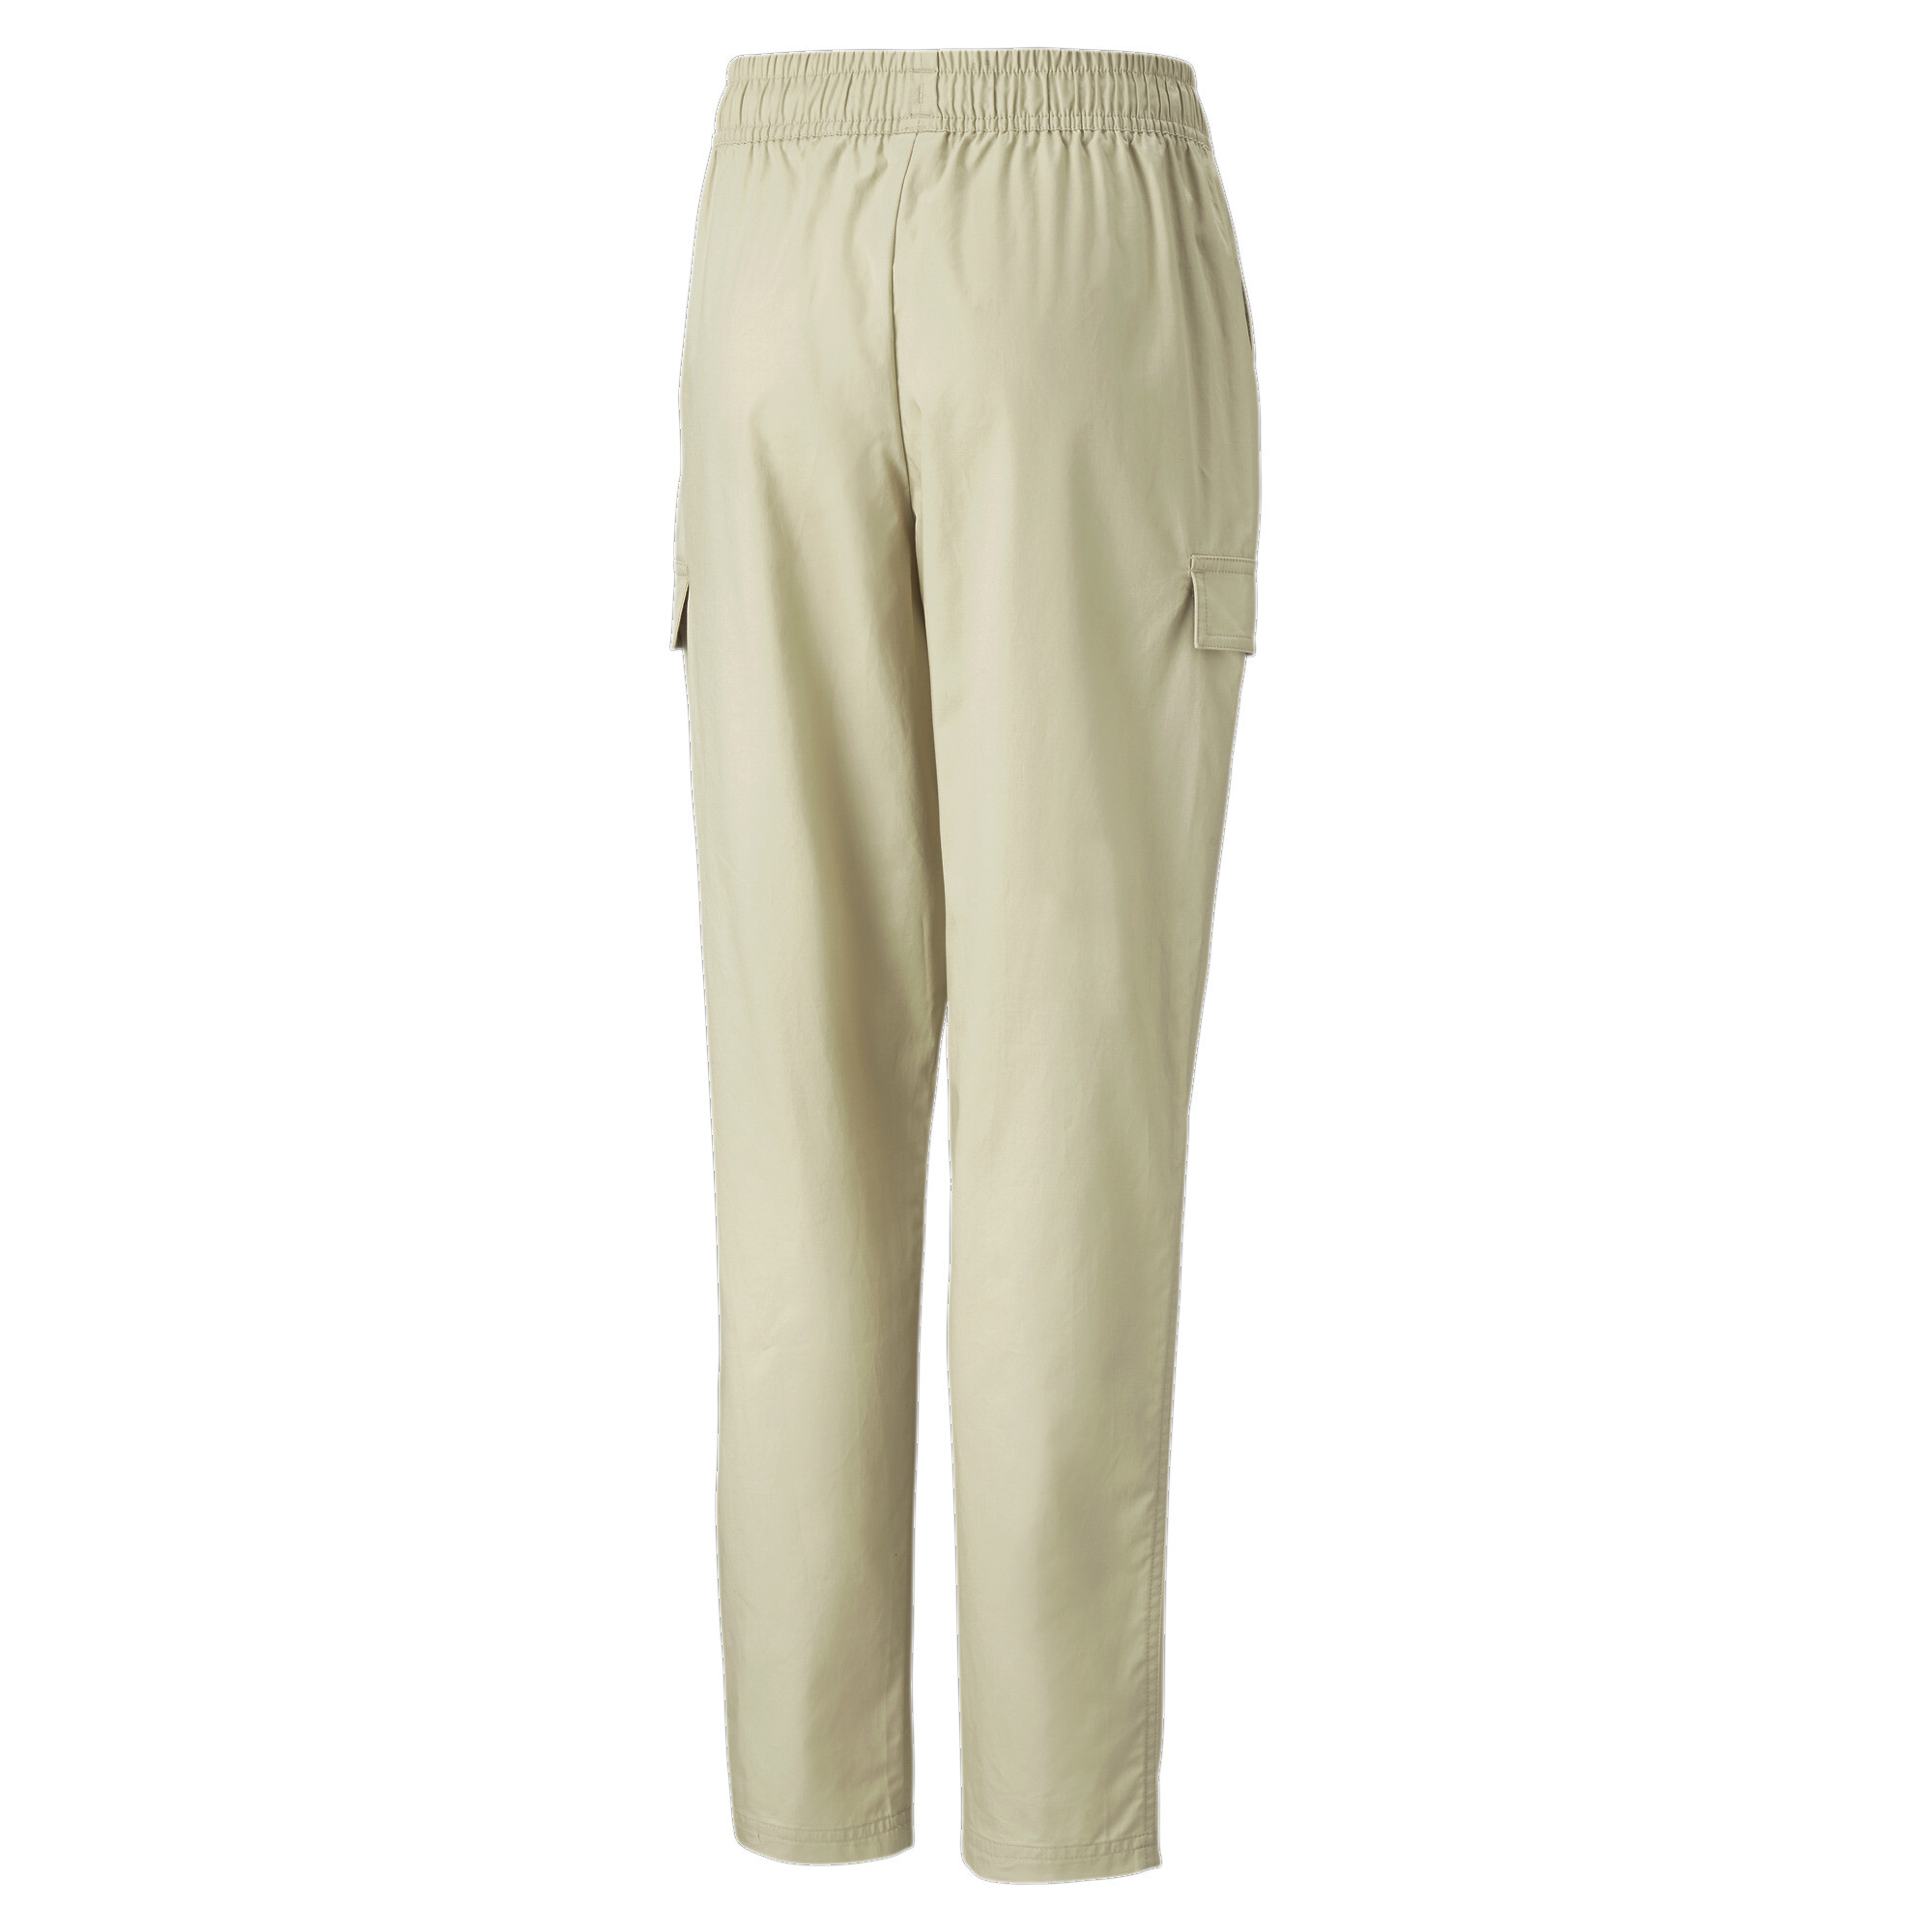 PUMA Classics Woven Sweatpants In Beige, Size 7-8 Youth